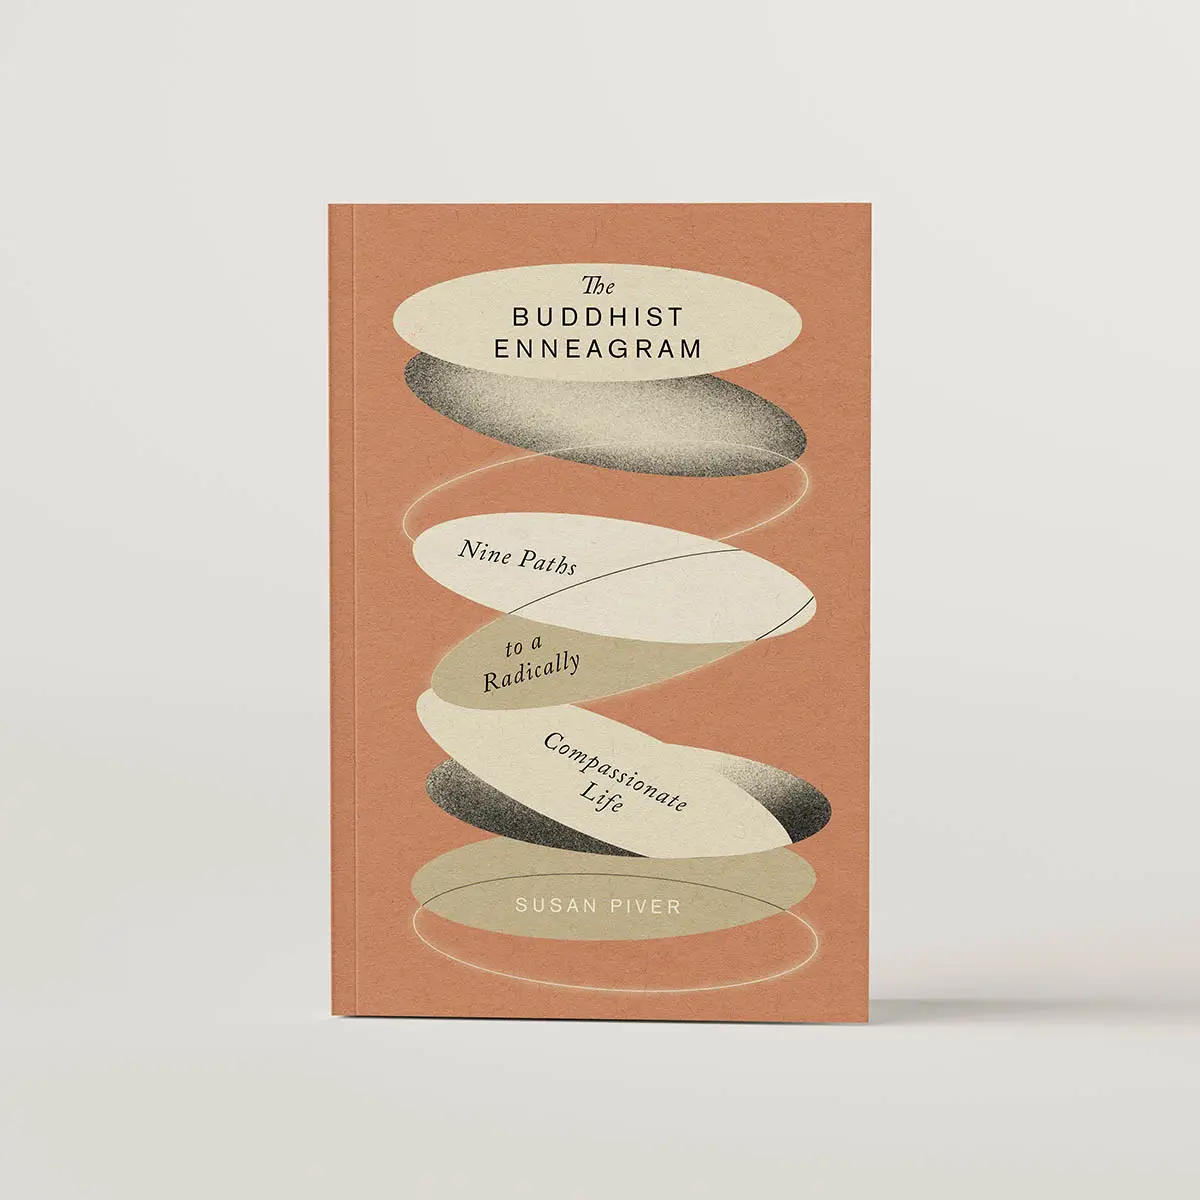 The Buddhist Enneagram book cover design concept